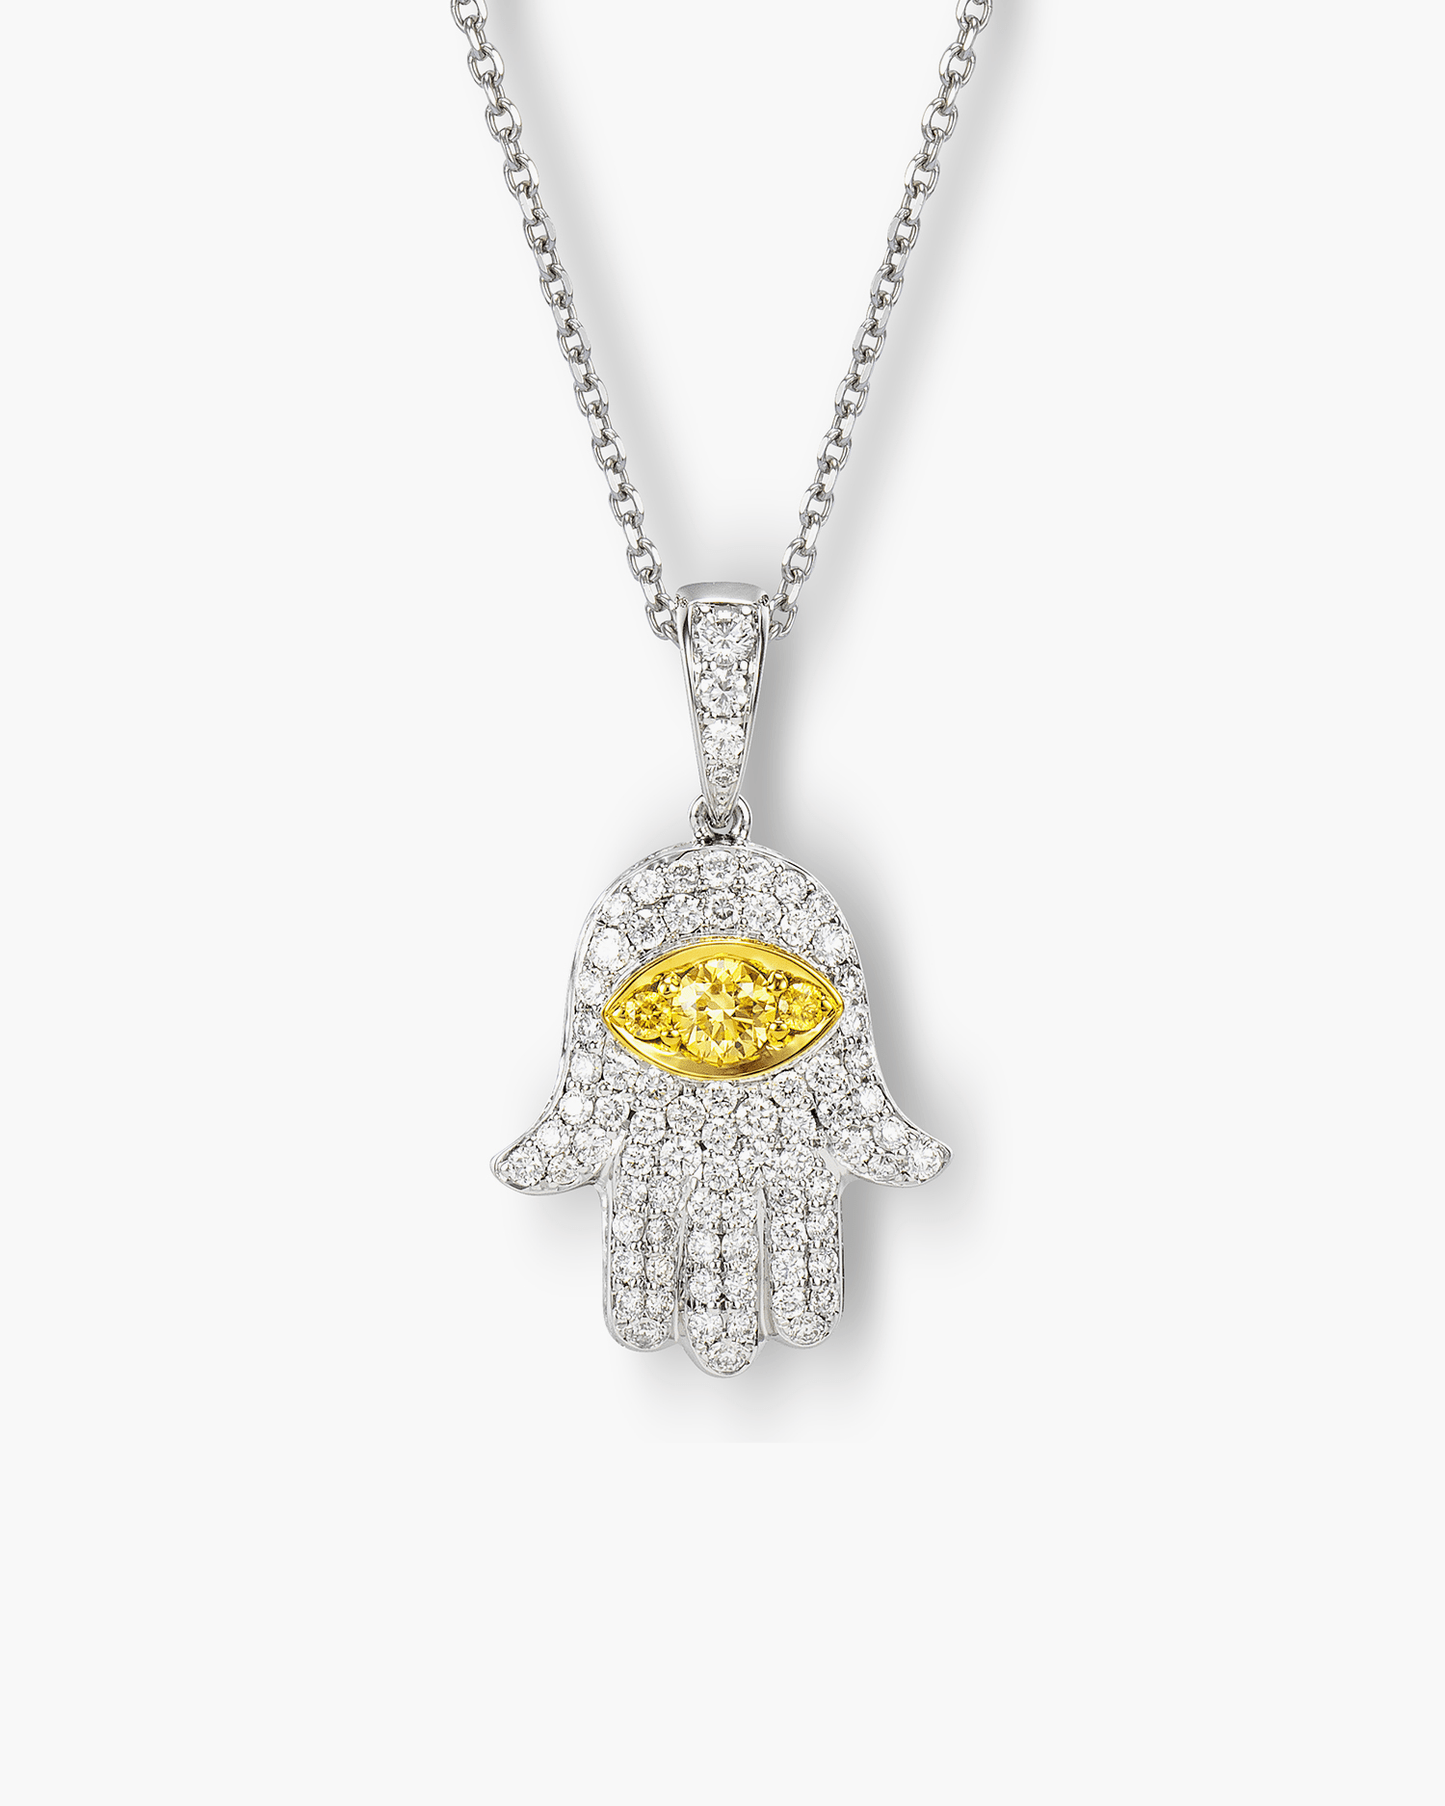 Yellow and White Diamond Hamsa Pendant Necklace, 0.71 carats